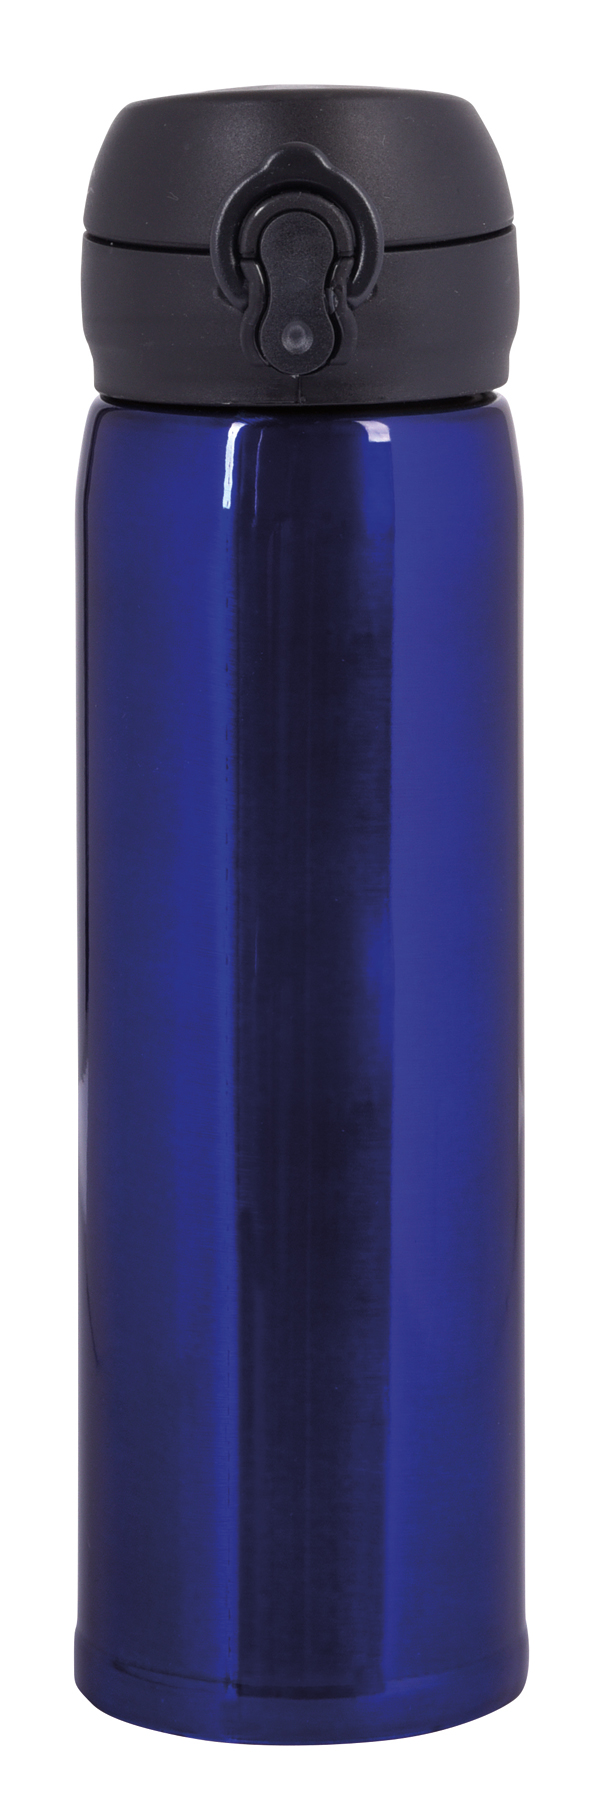 Vakuum-Trinkflasche OOLONG - blau